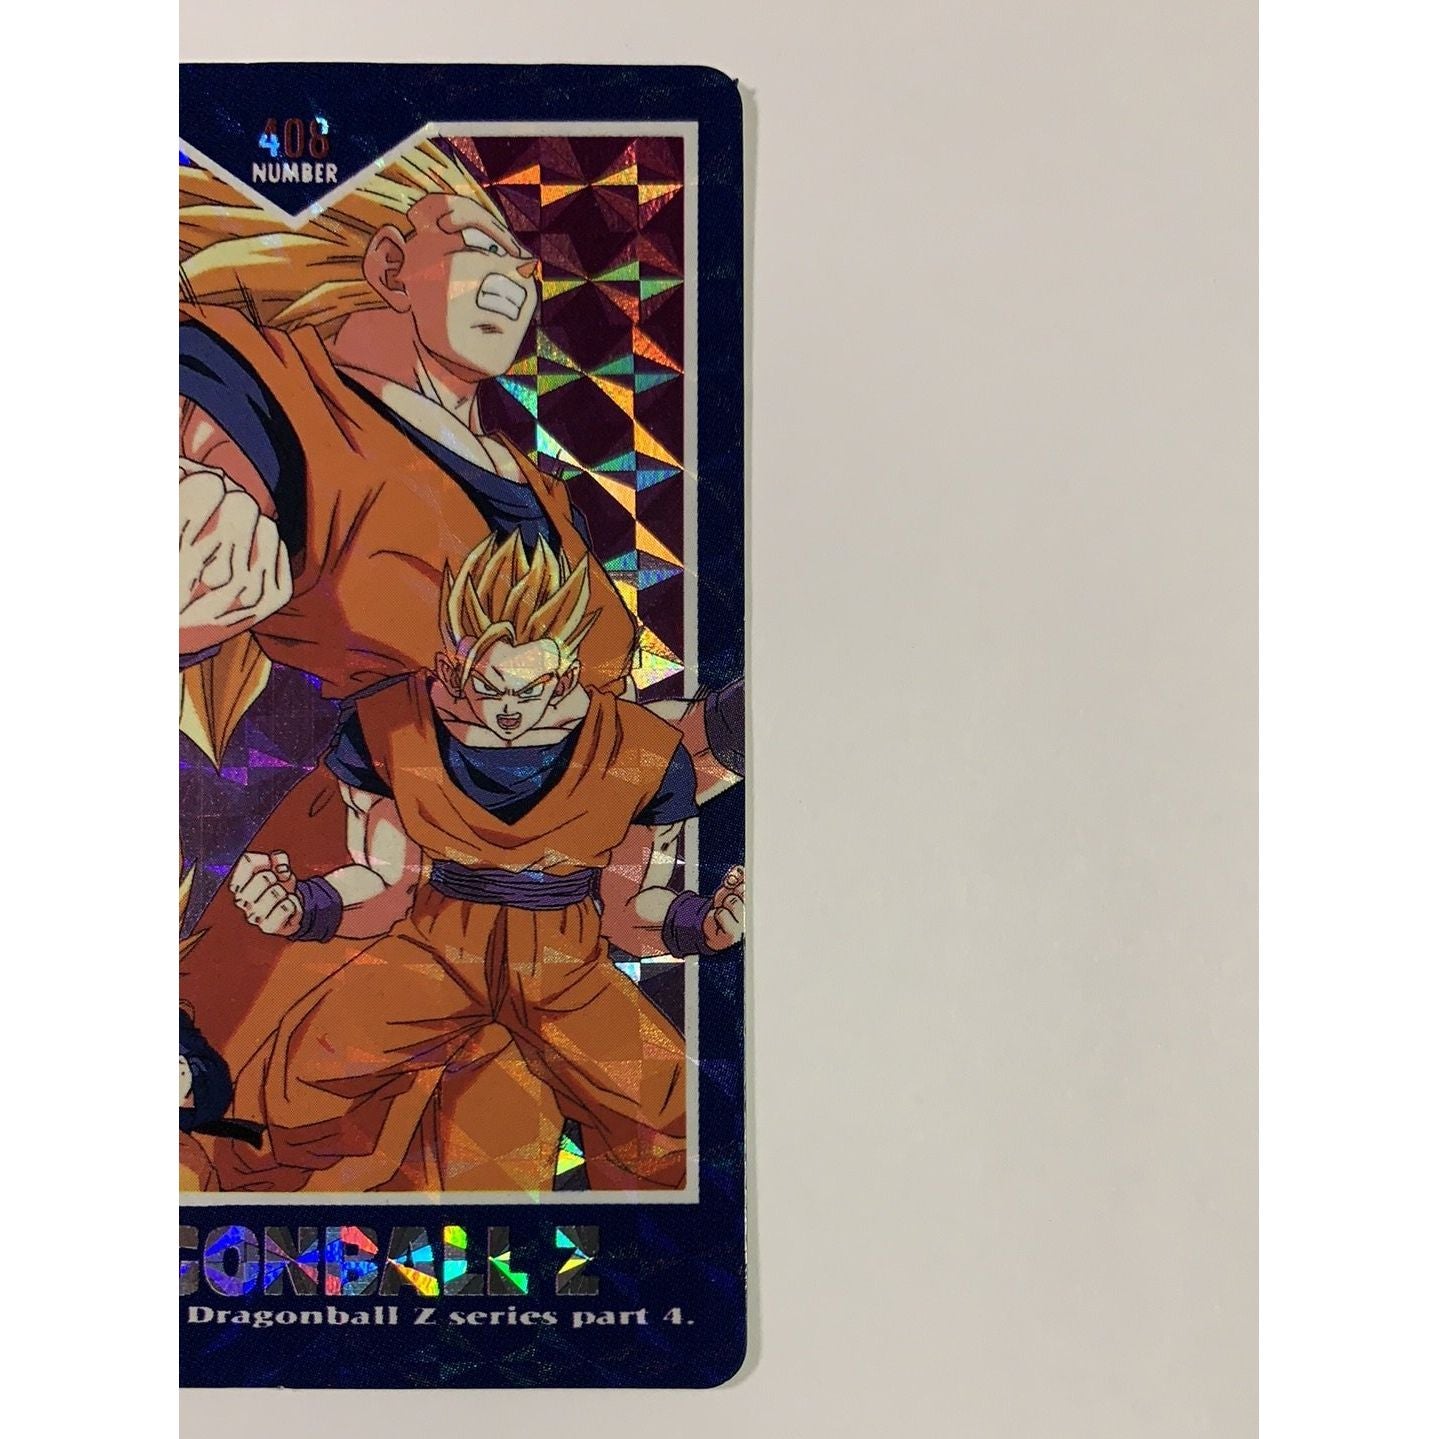  1995 Carte Hero Collection Dragon Ball Z Part 4 Super Saiyan Team Z Holo Prism #408  Local Legends Cards & Collectibles